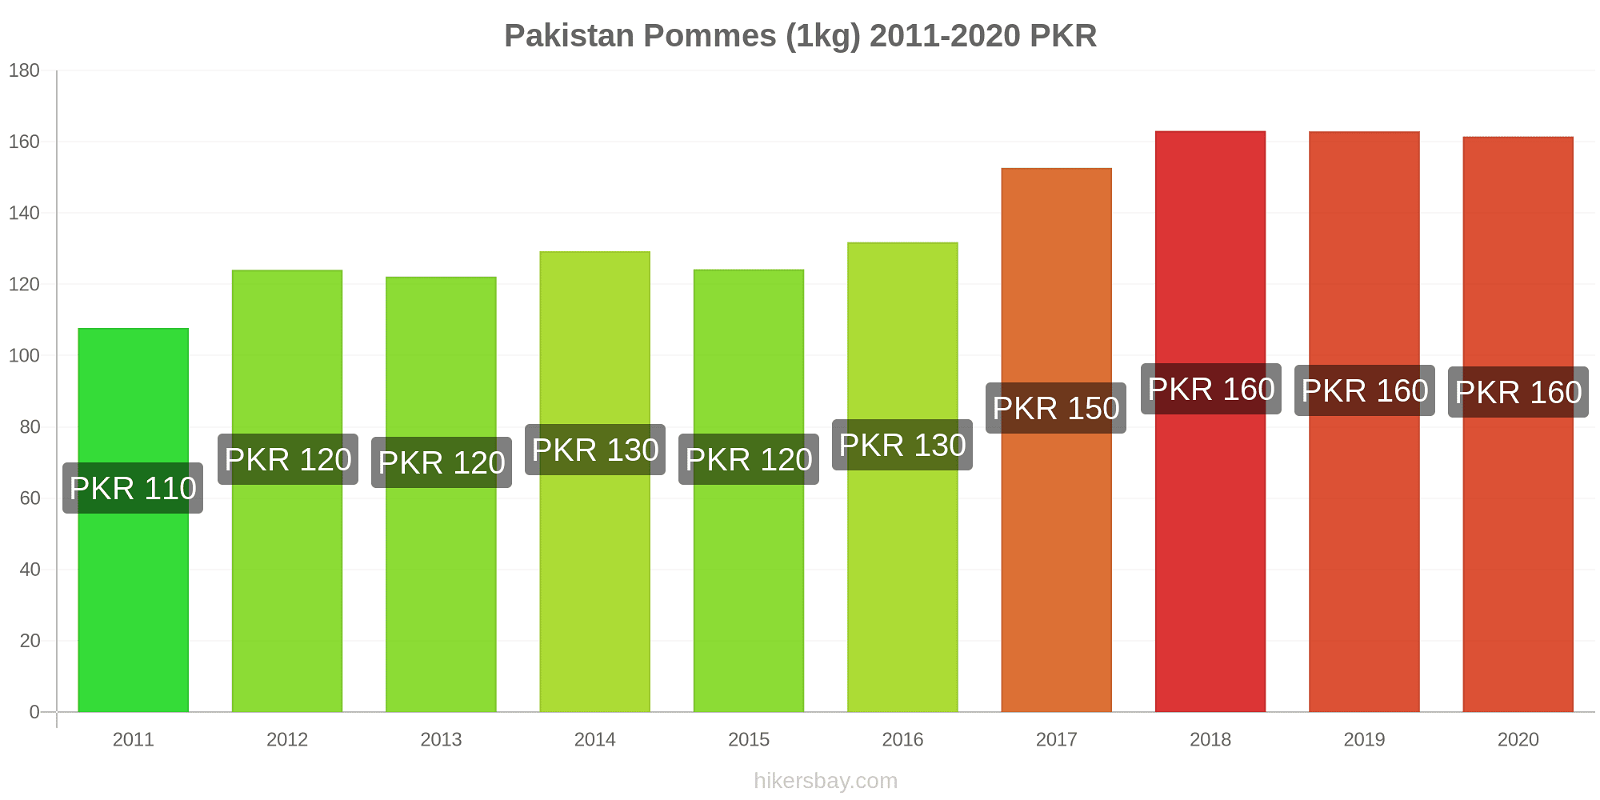 Pakistan changements de prix Pommes (1kg) hikersbay.com